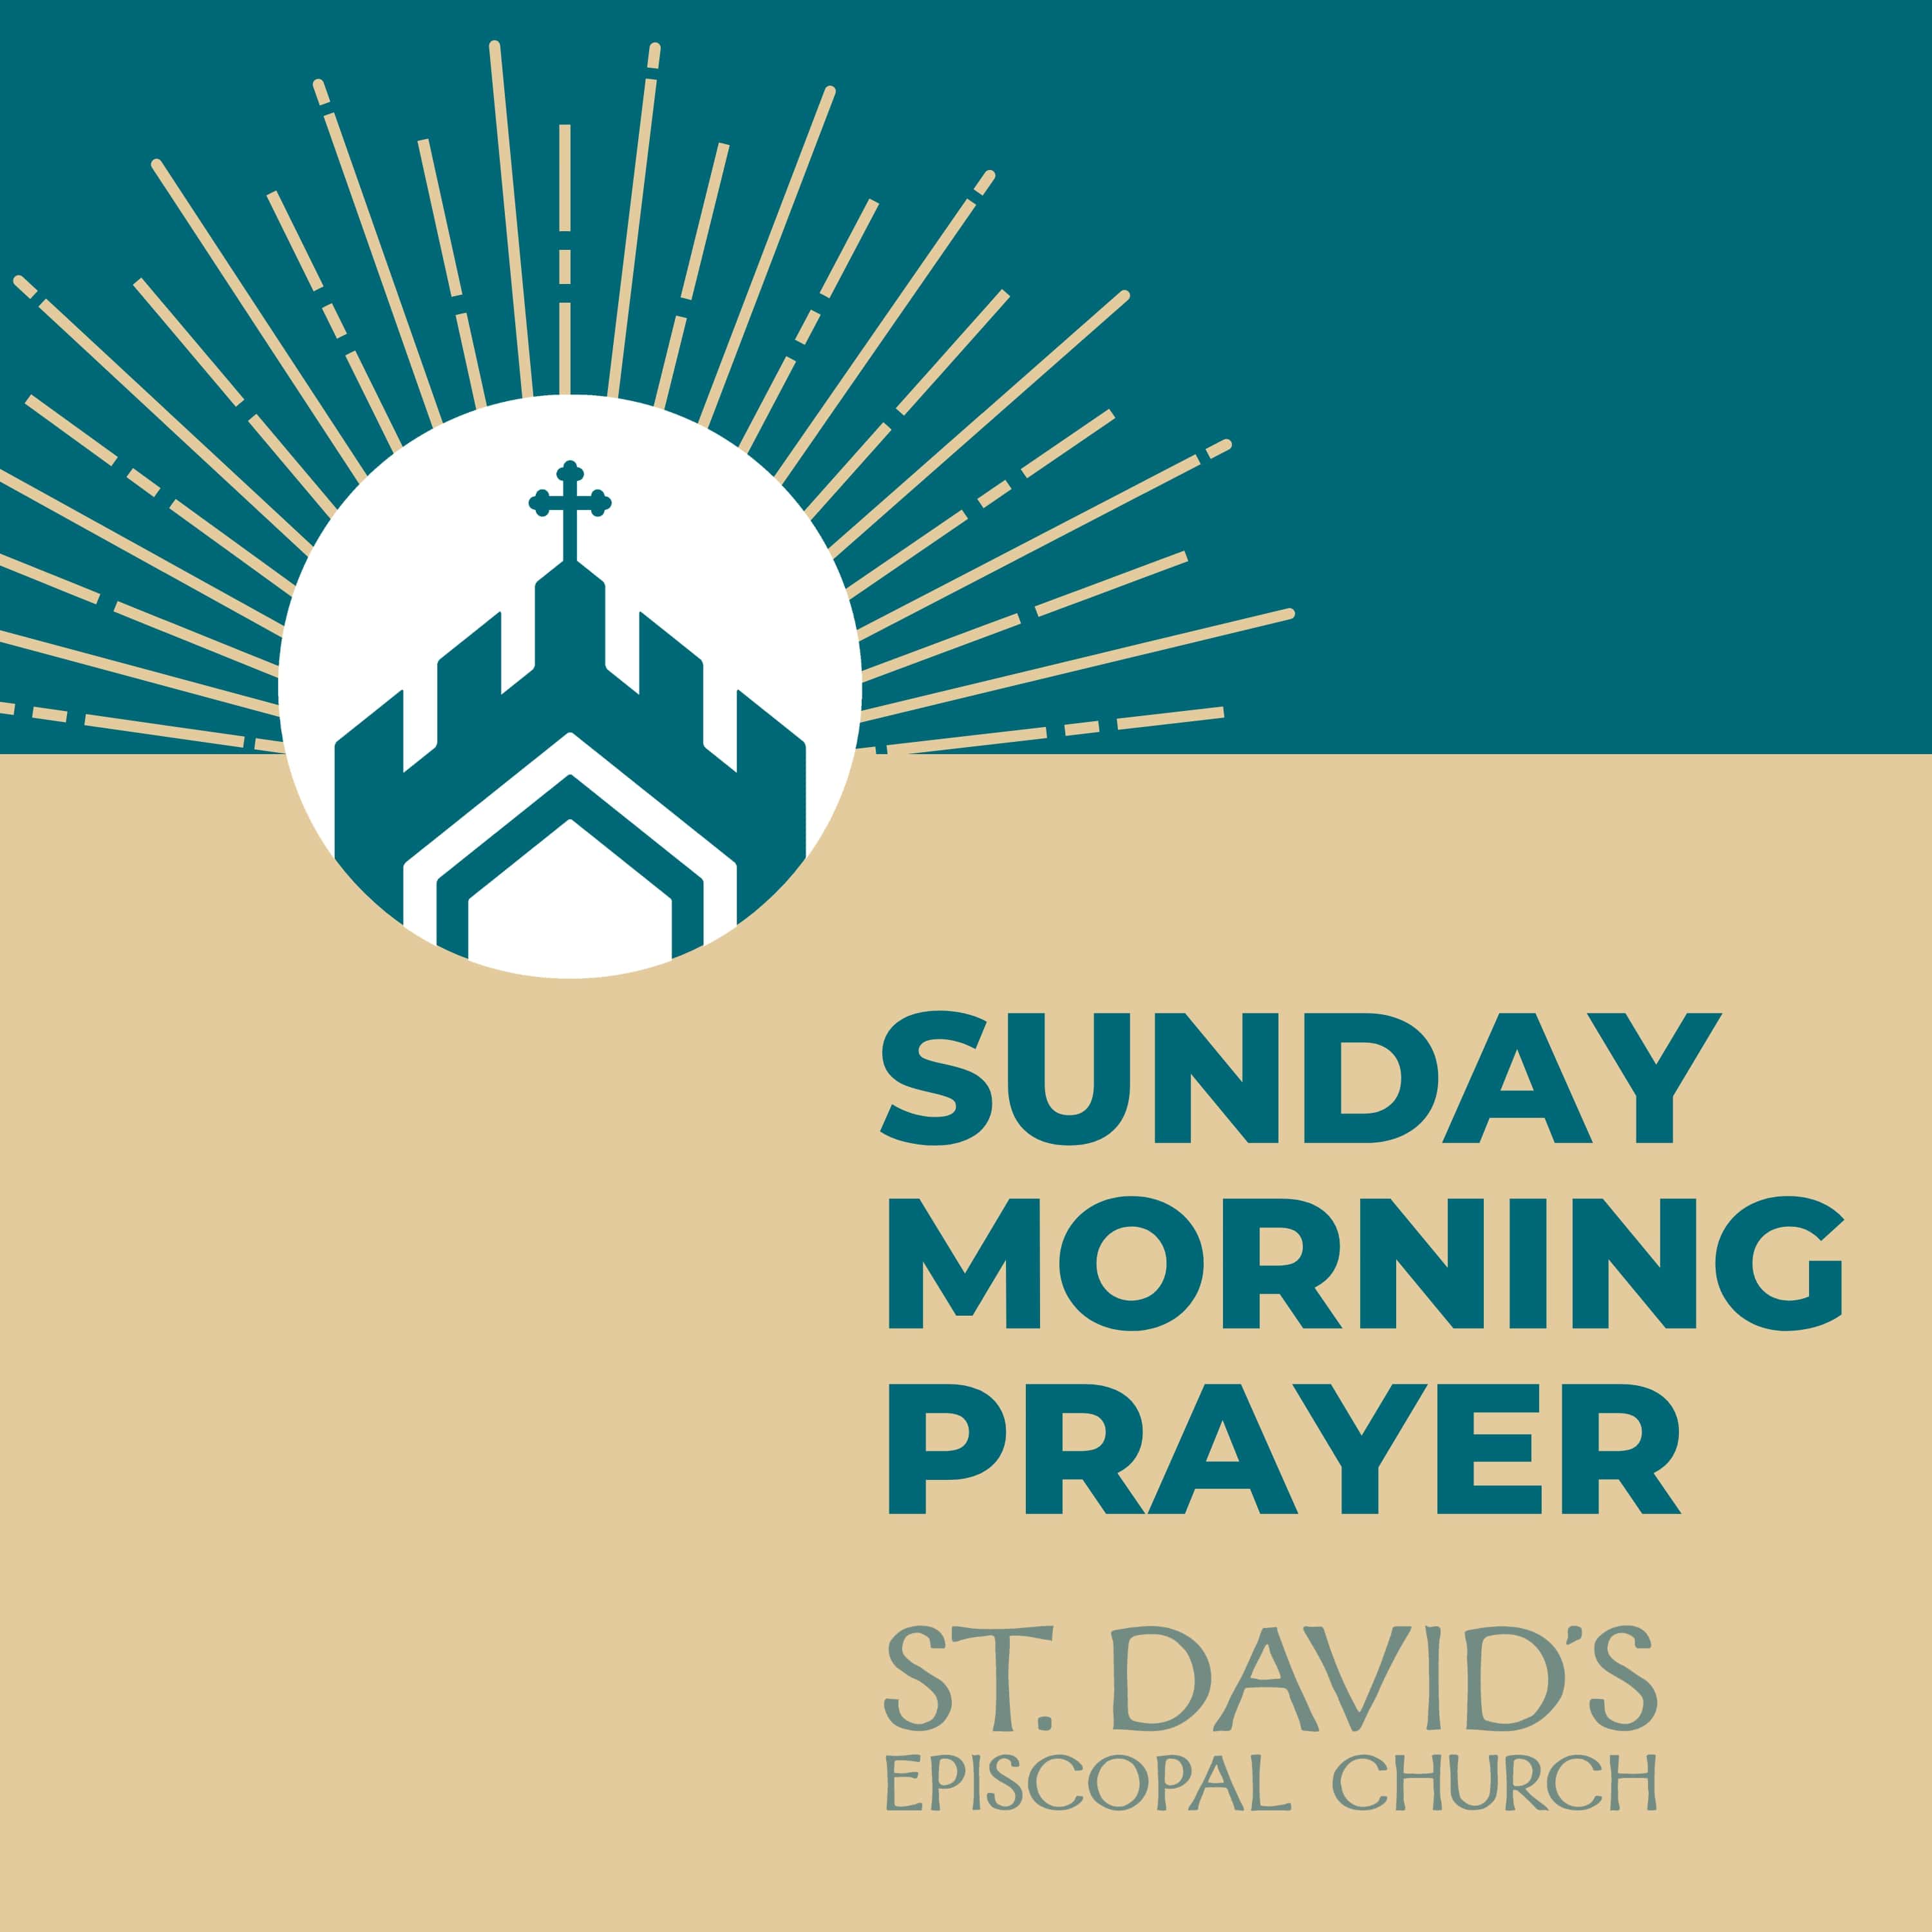 Sunday Morning Prayer: Rite Two, Year 1, 1st Sunday in Lent